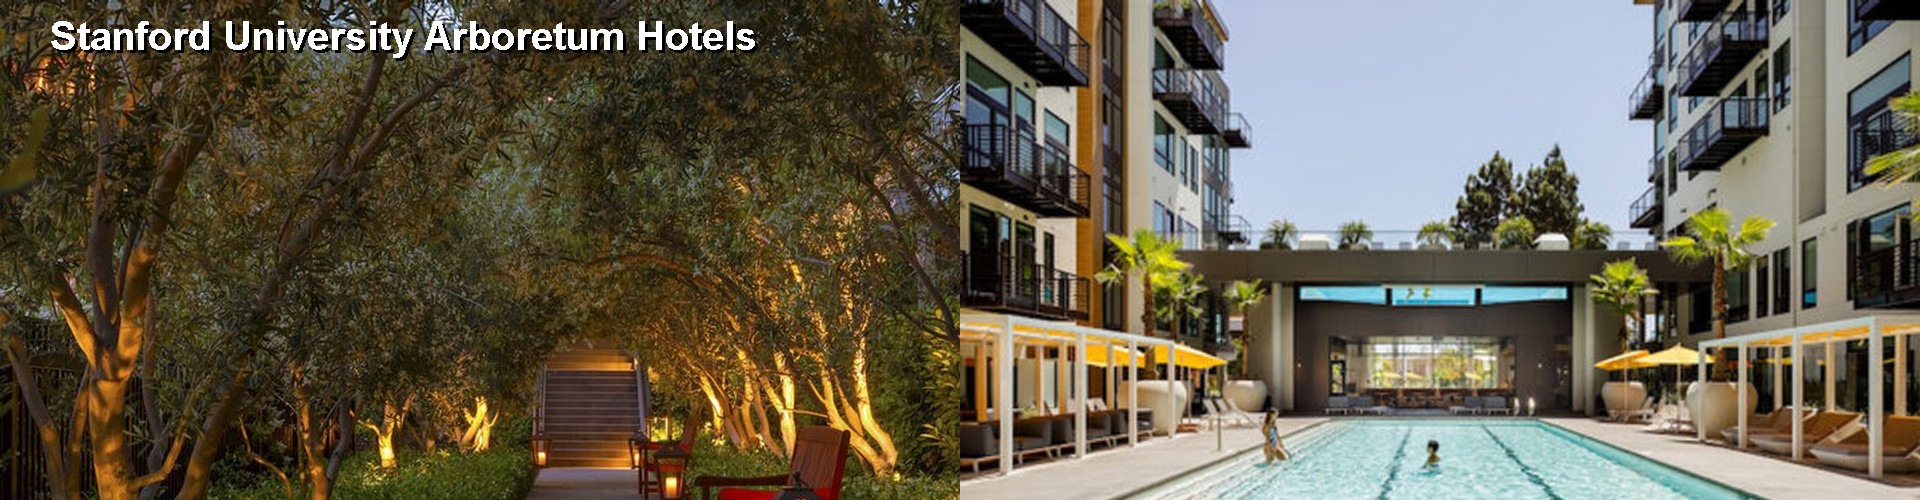 5 Best Hotels near Stanford University Arboretum